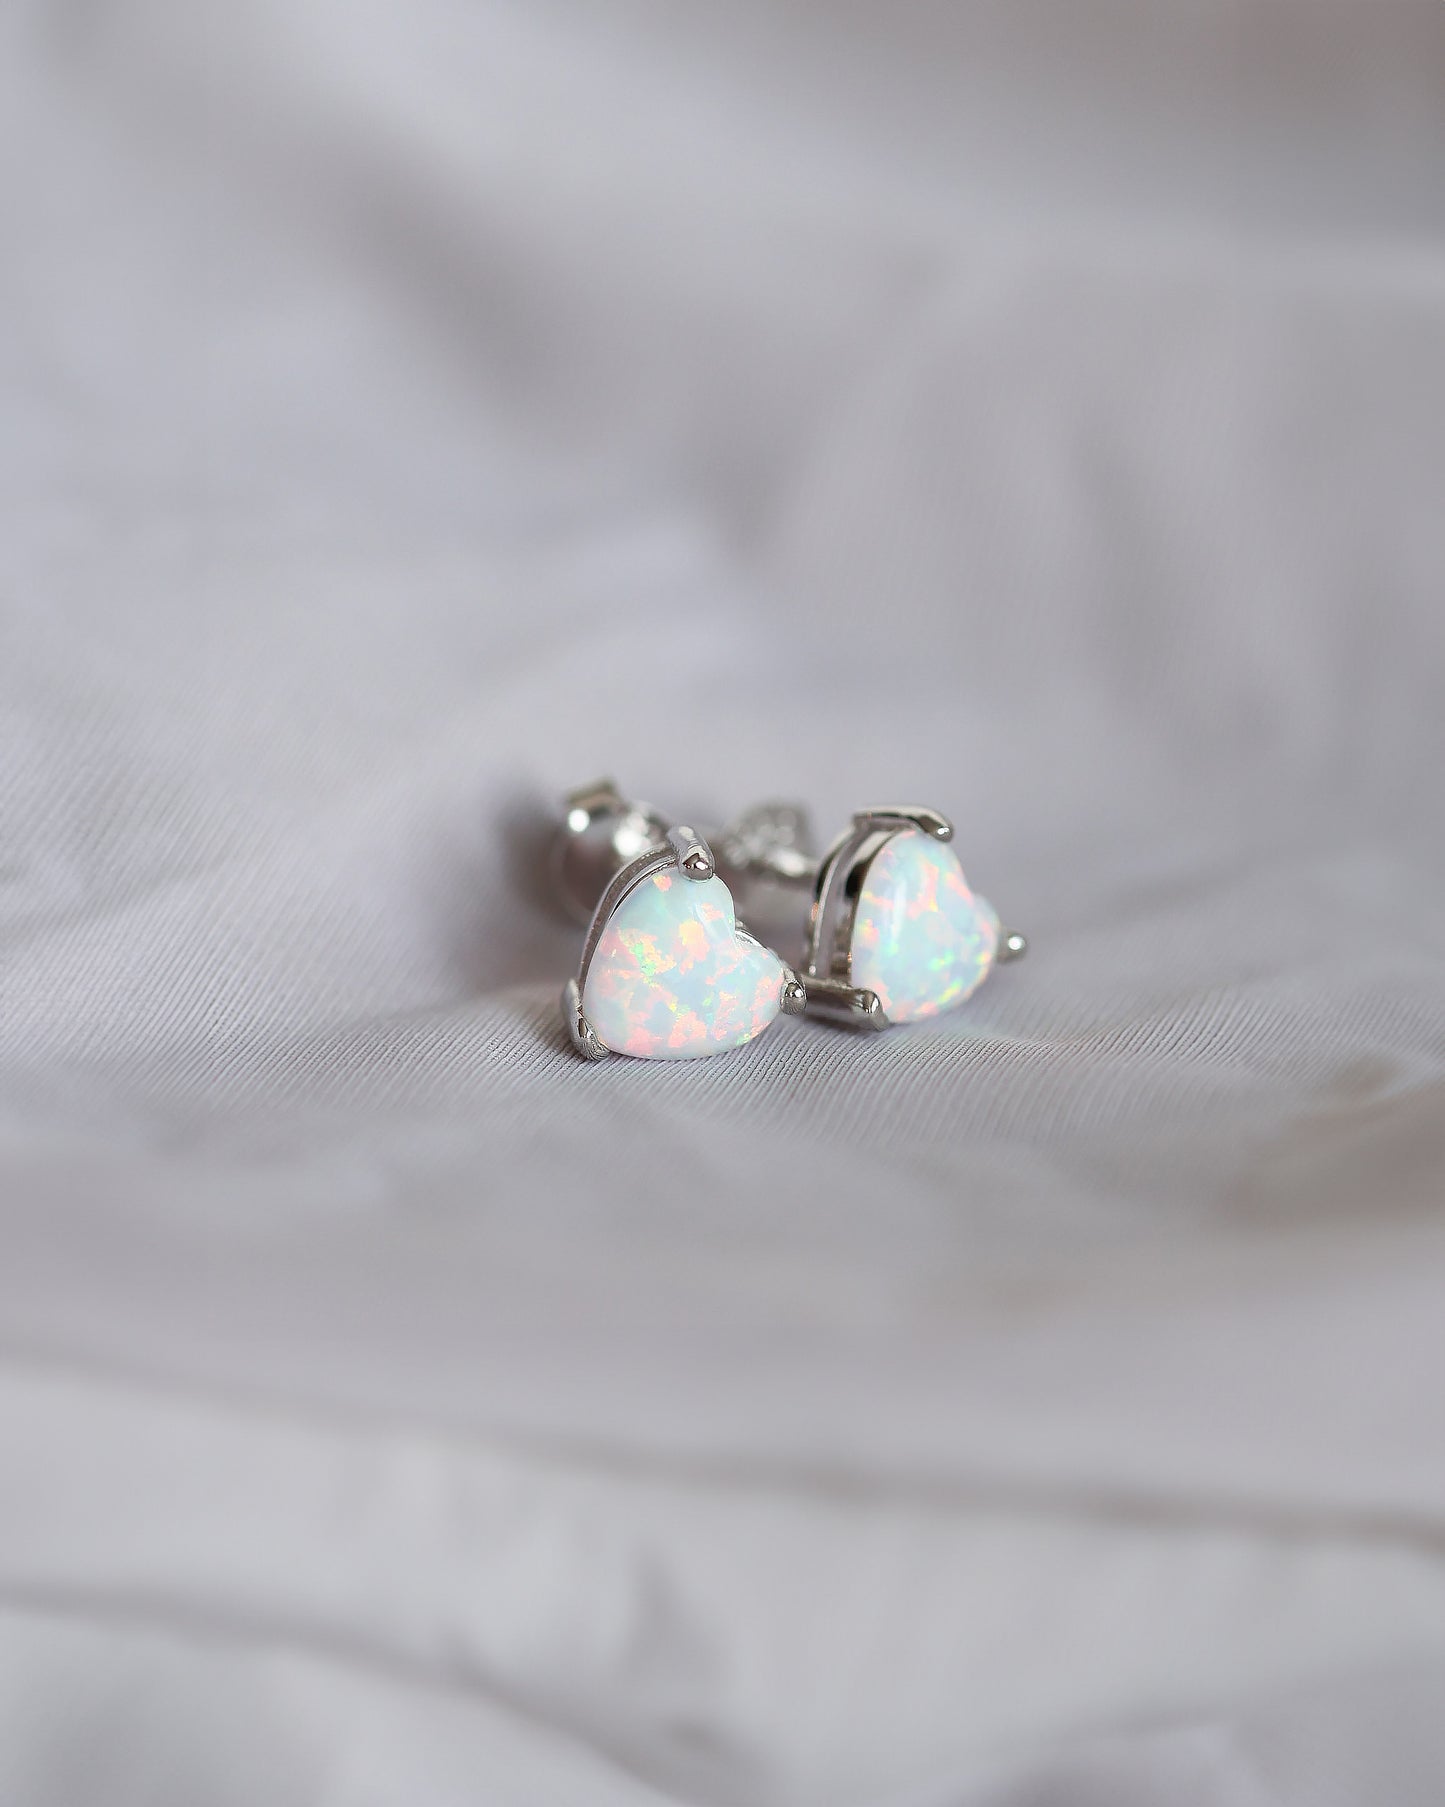 Elegant Heart-Shaped Opal Stud Earrings with Sterling Silver Posts